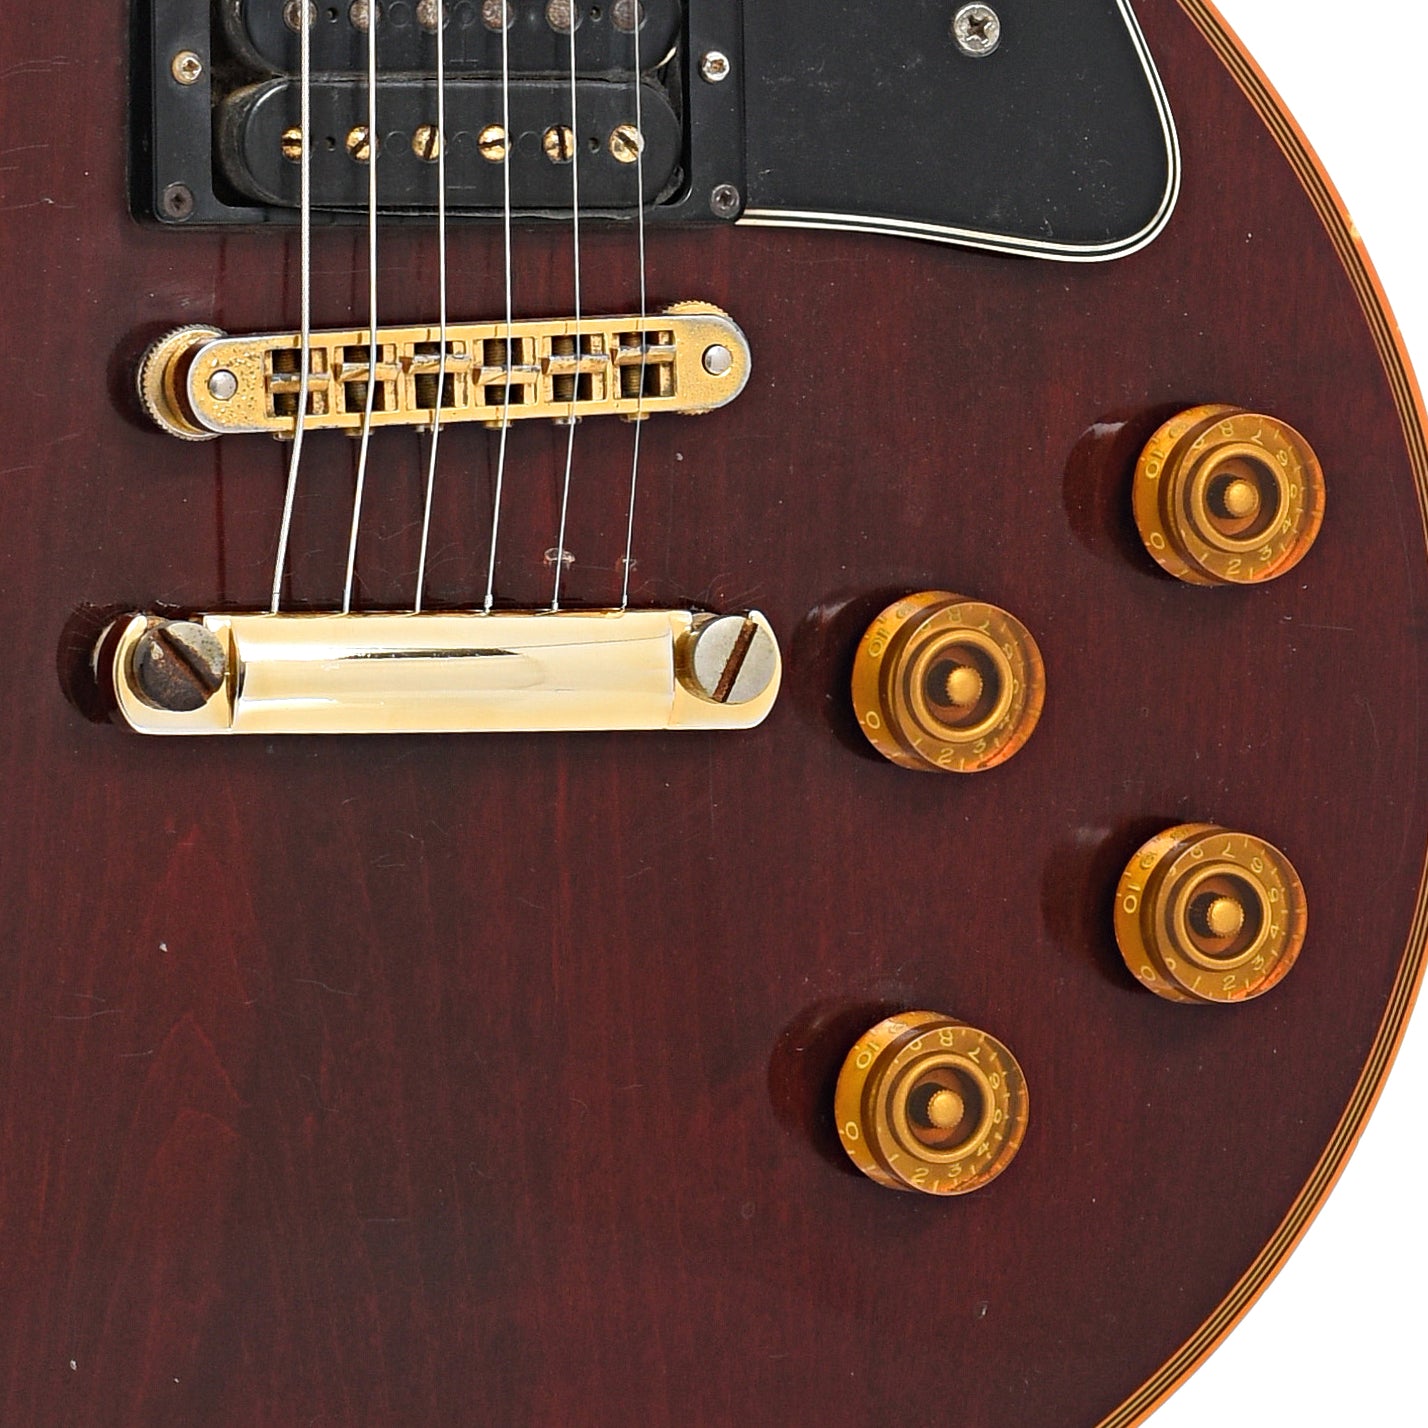 Bridge and controls of Gibson Les Paul Custom Electric Guitar (1977)